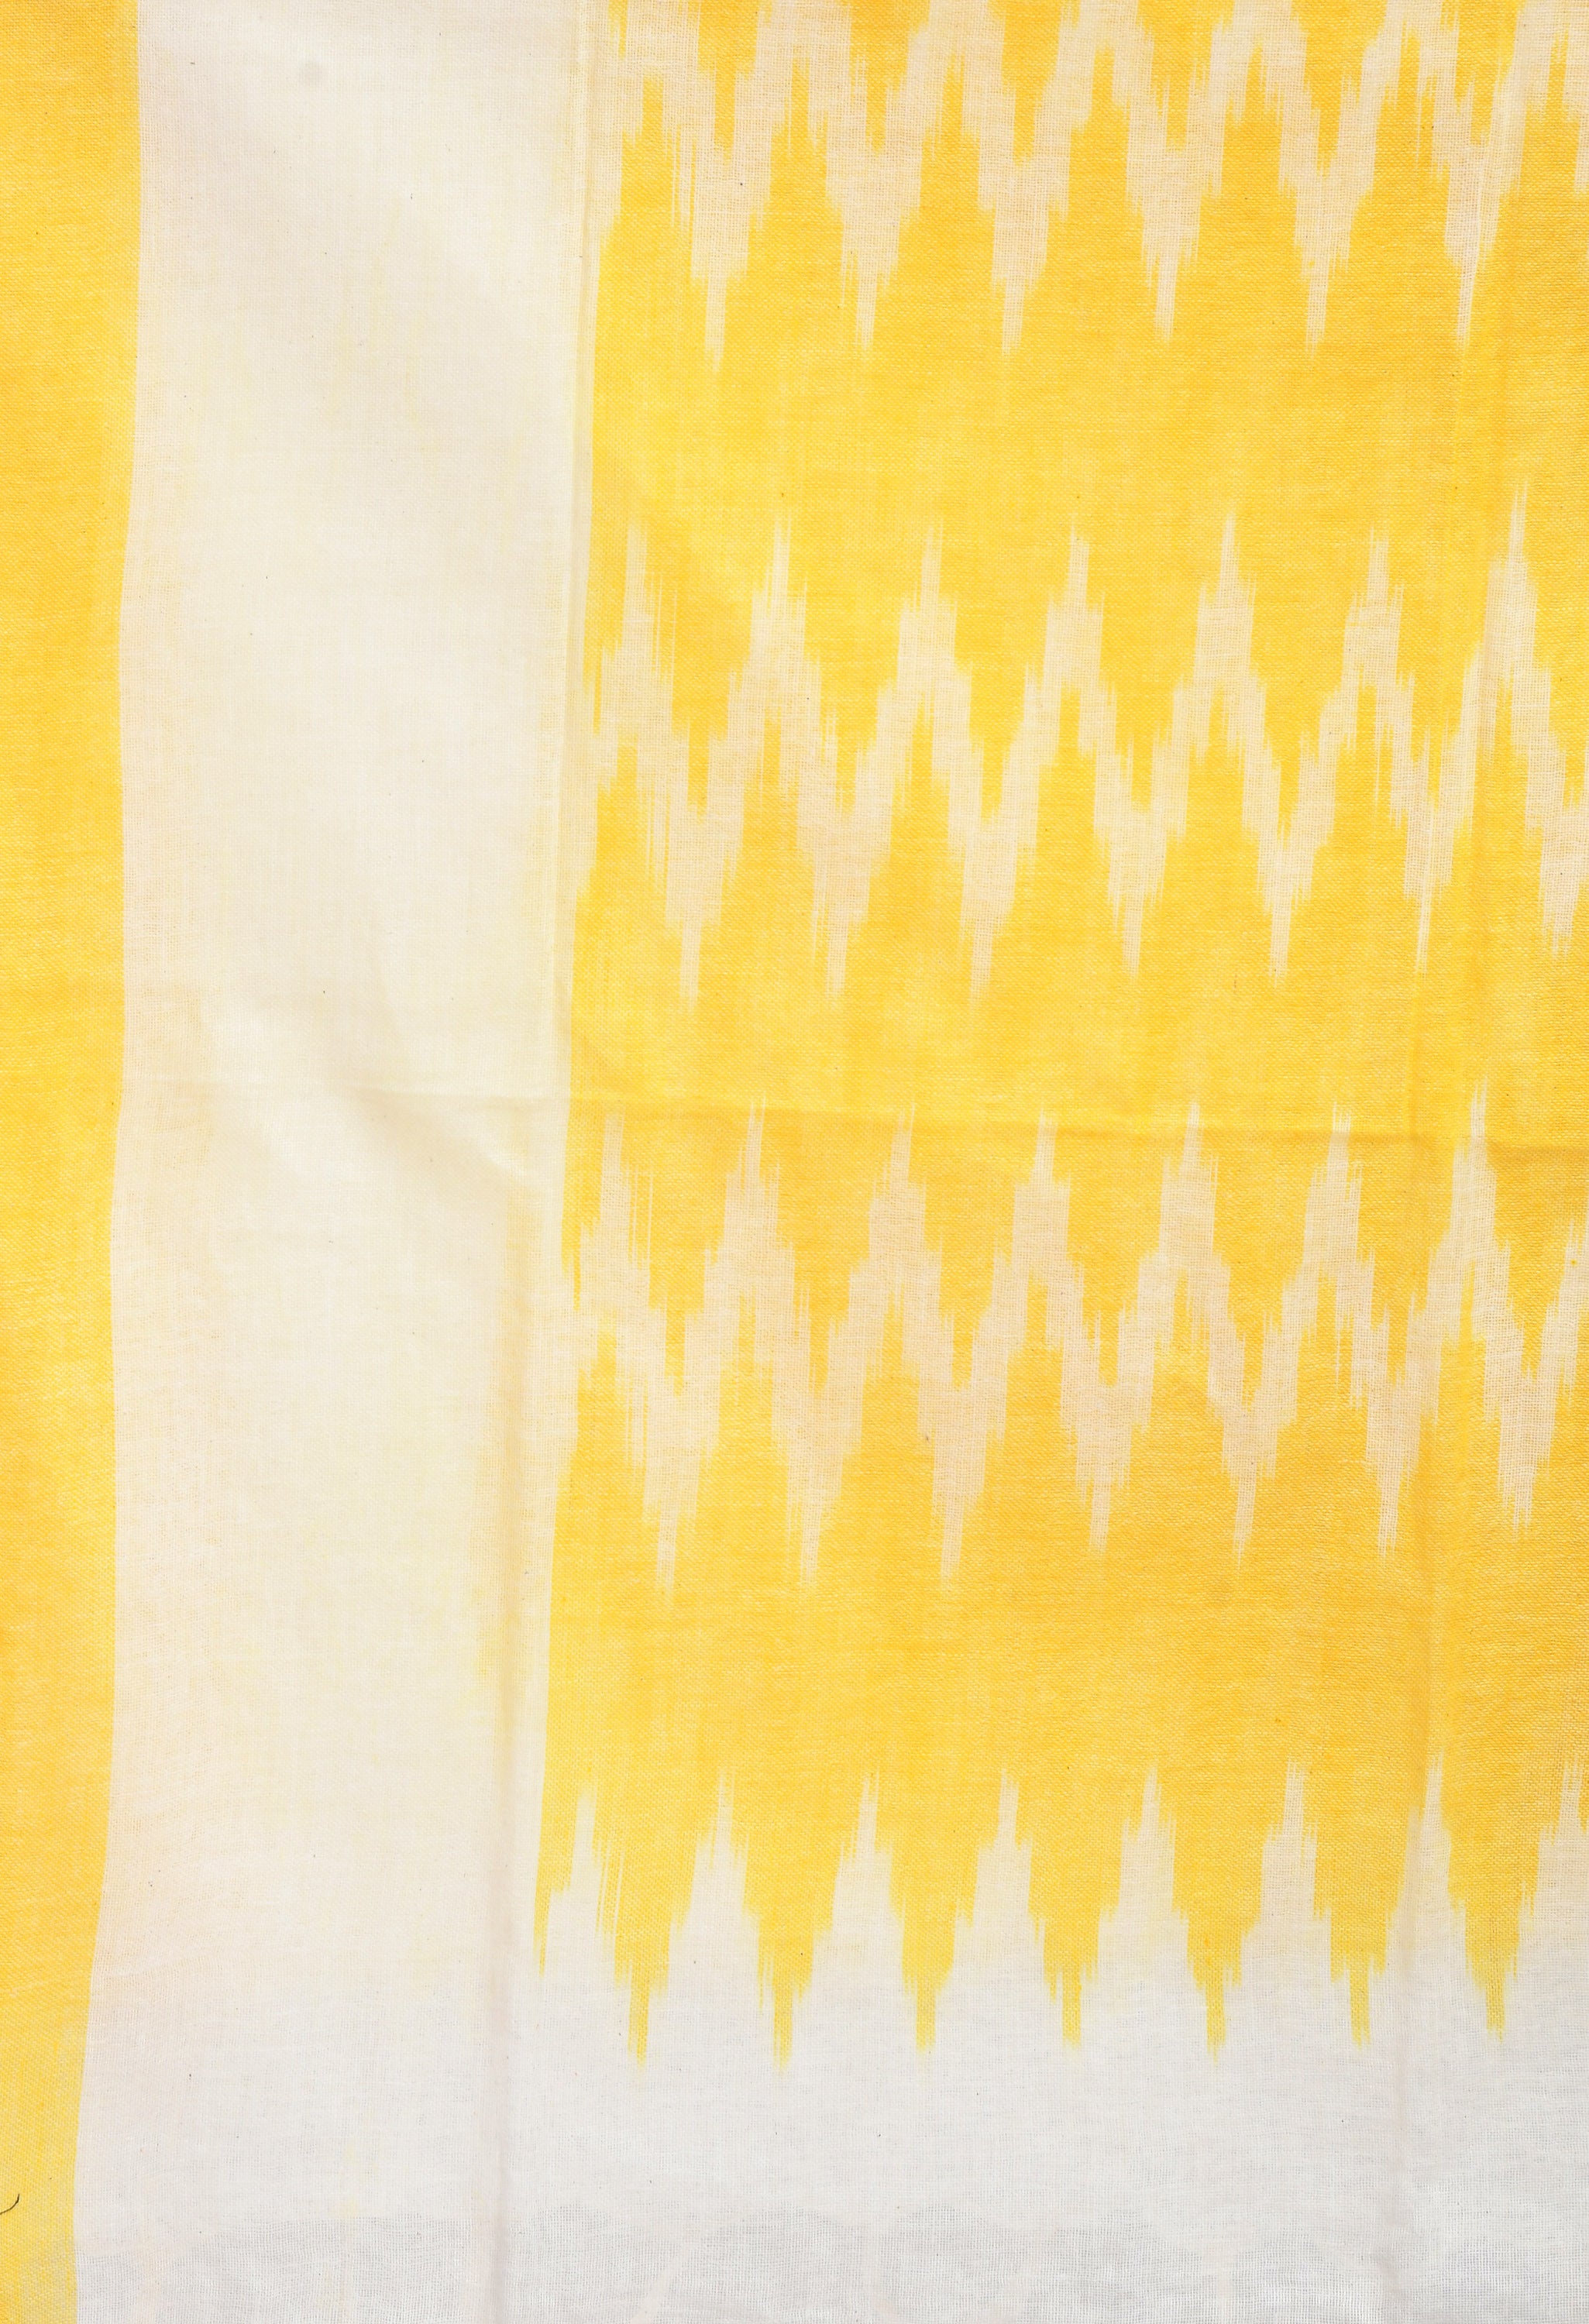 Women's Handloom Cotton Ikkat Yellow Dupatta - Moeza